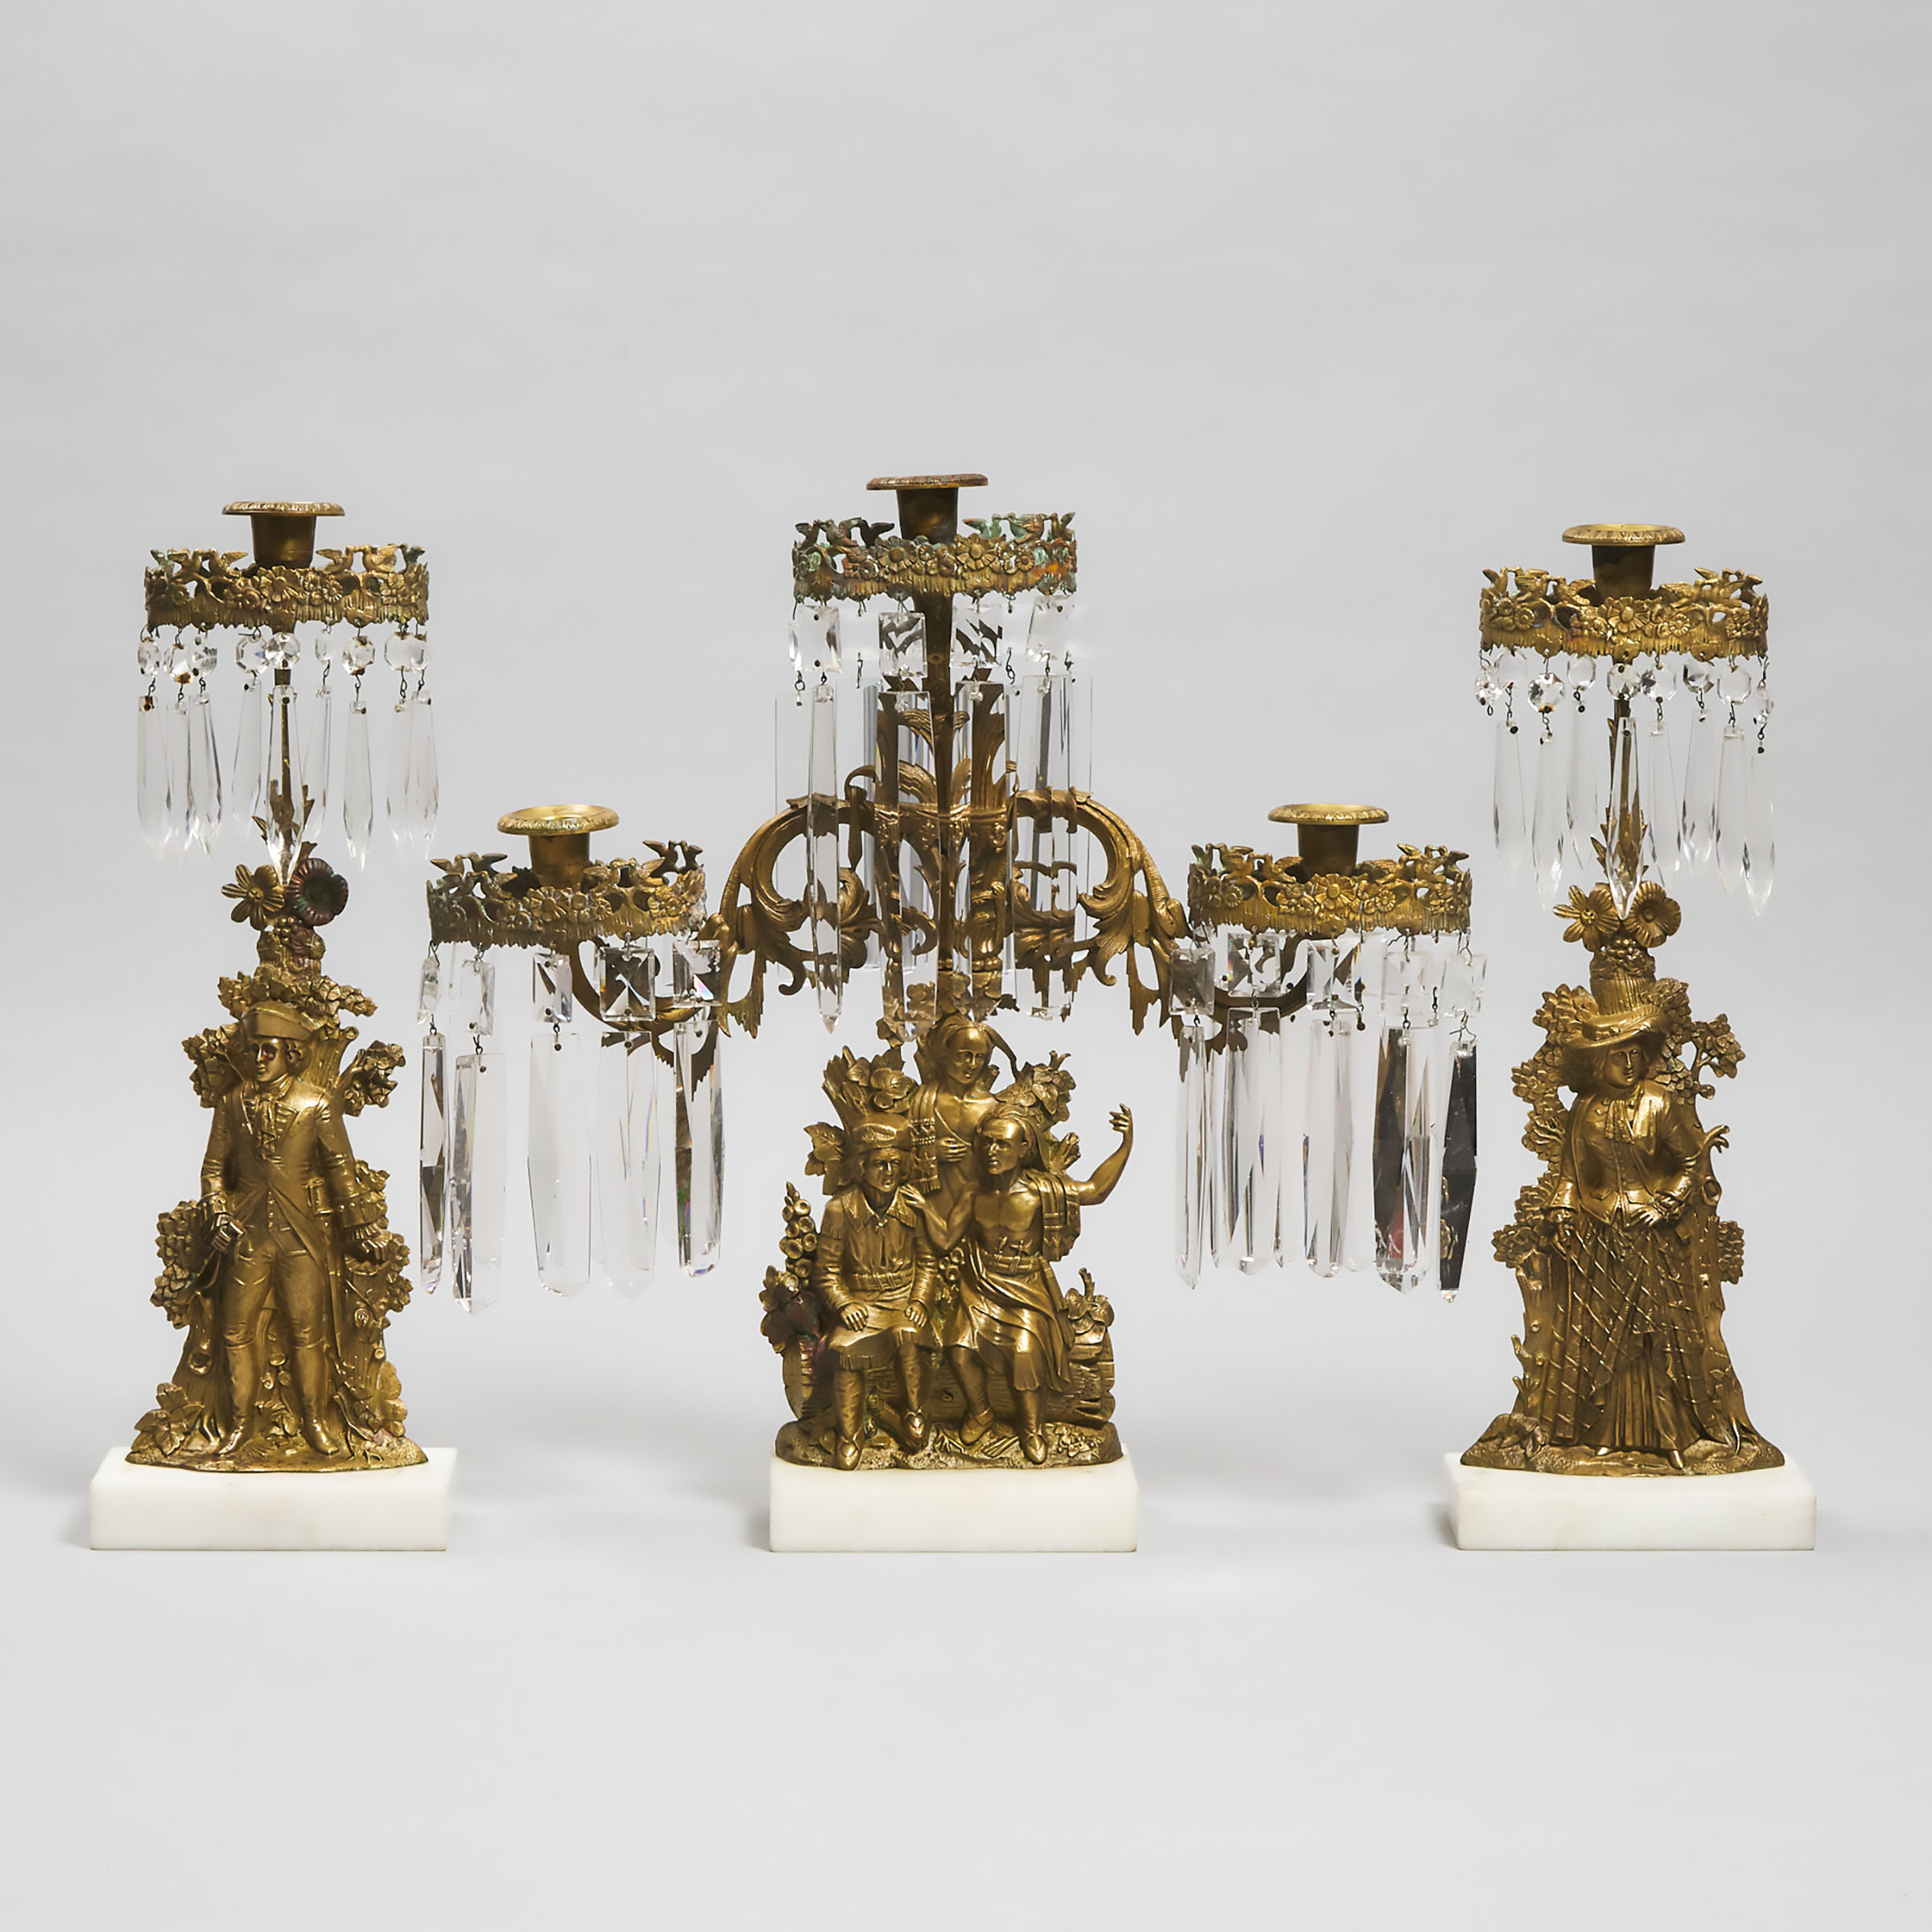 Three Piece American Gilt Brass and Cut Glass Mantle Girandole Garniture, Cornelius & Co., Philadelphia, PA, c.1848/9